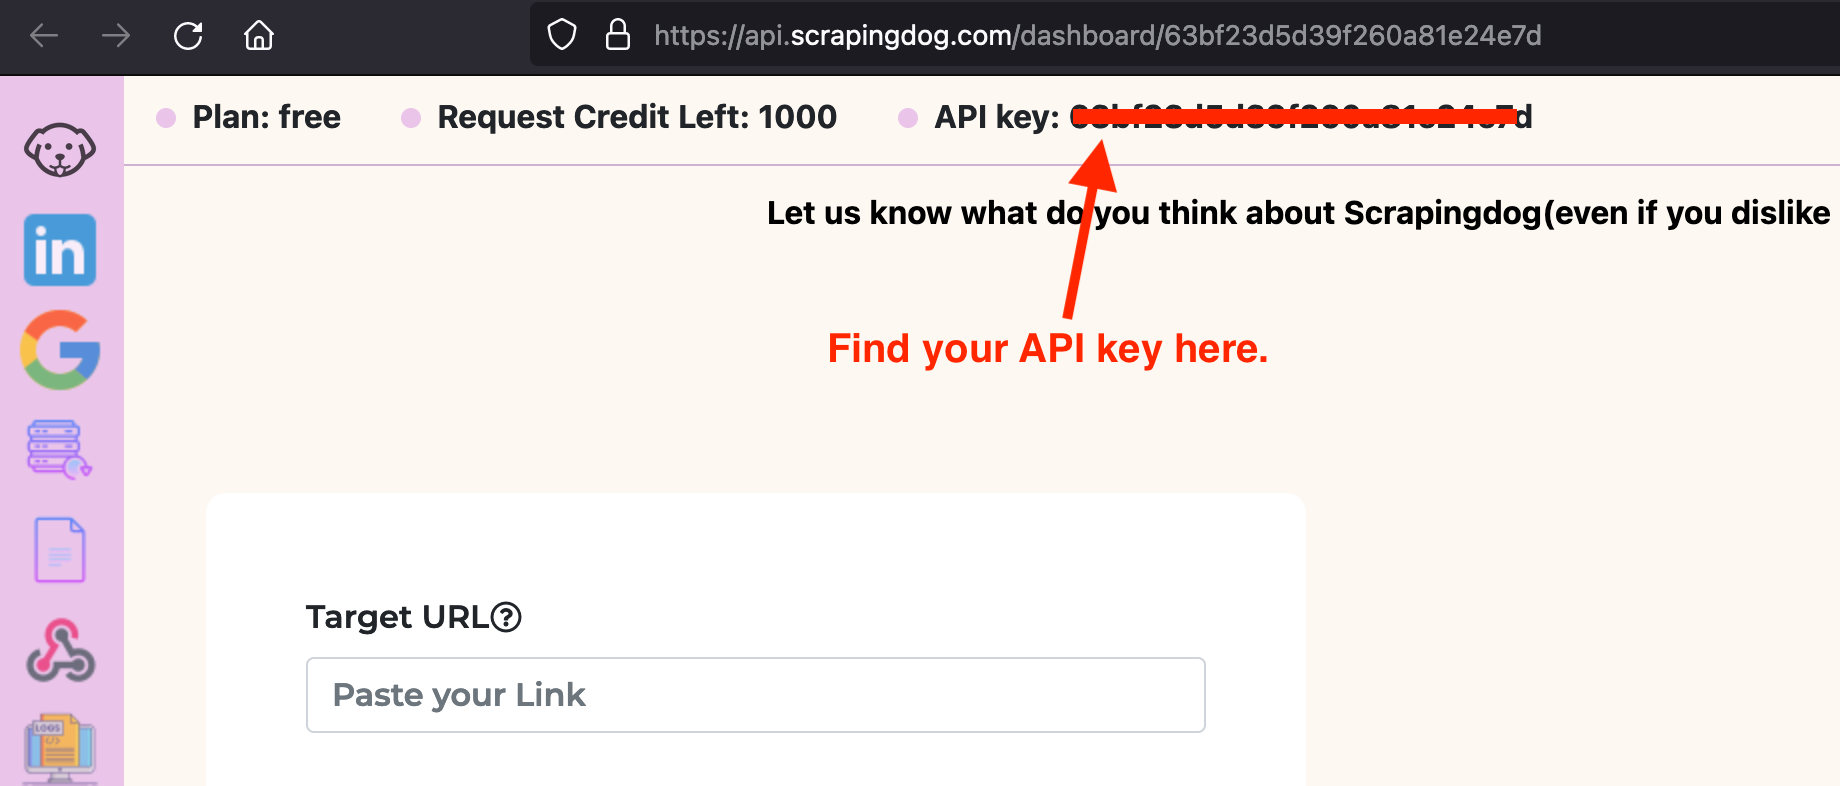 Copy the API key from the Scrapingdog dashboard.